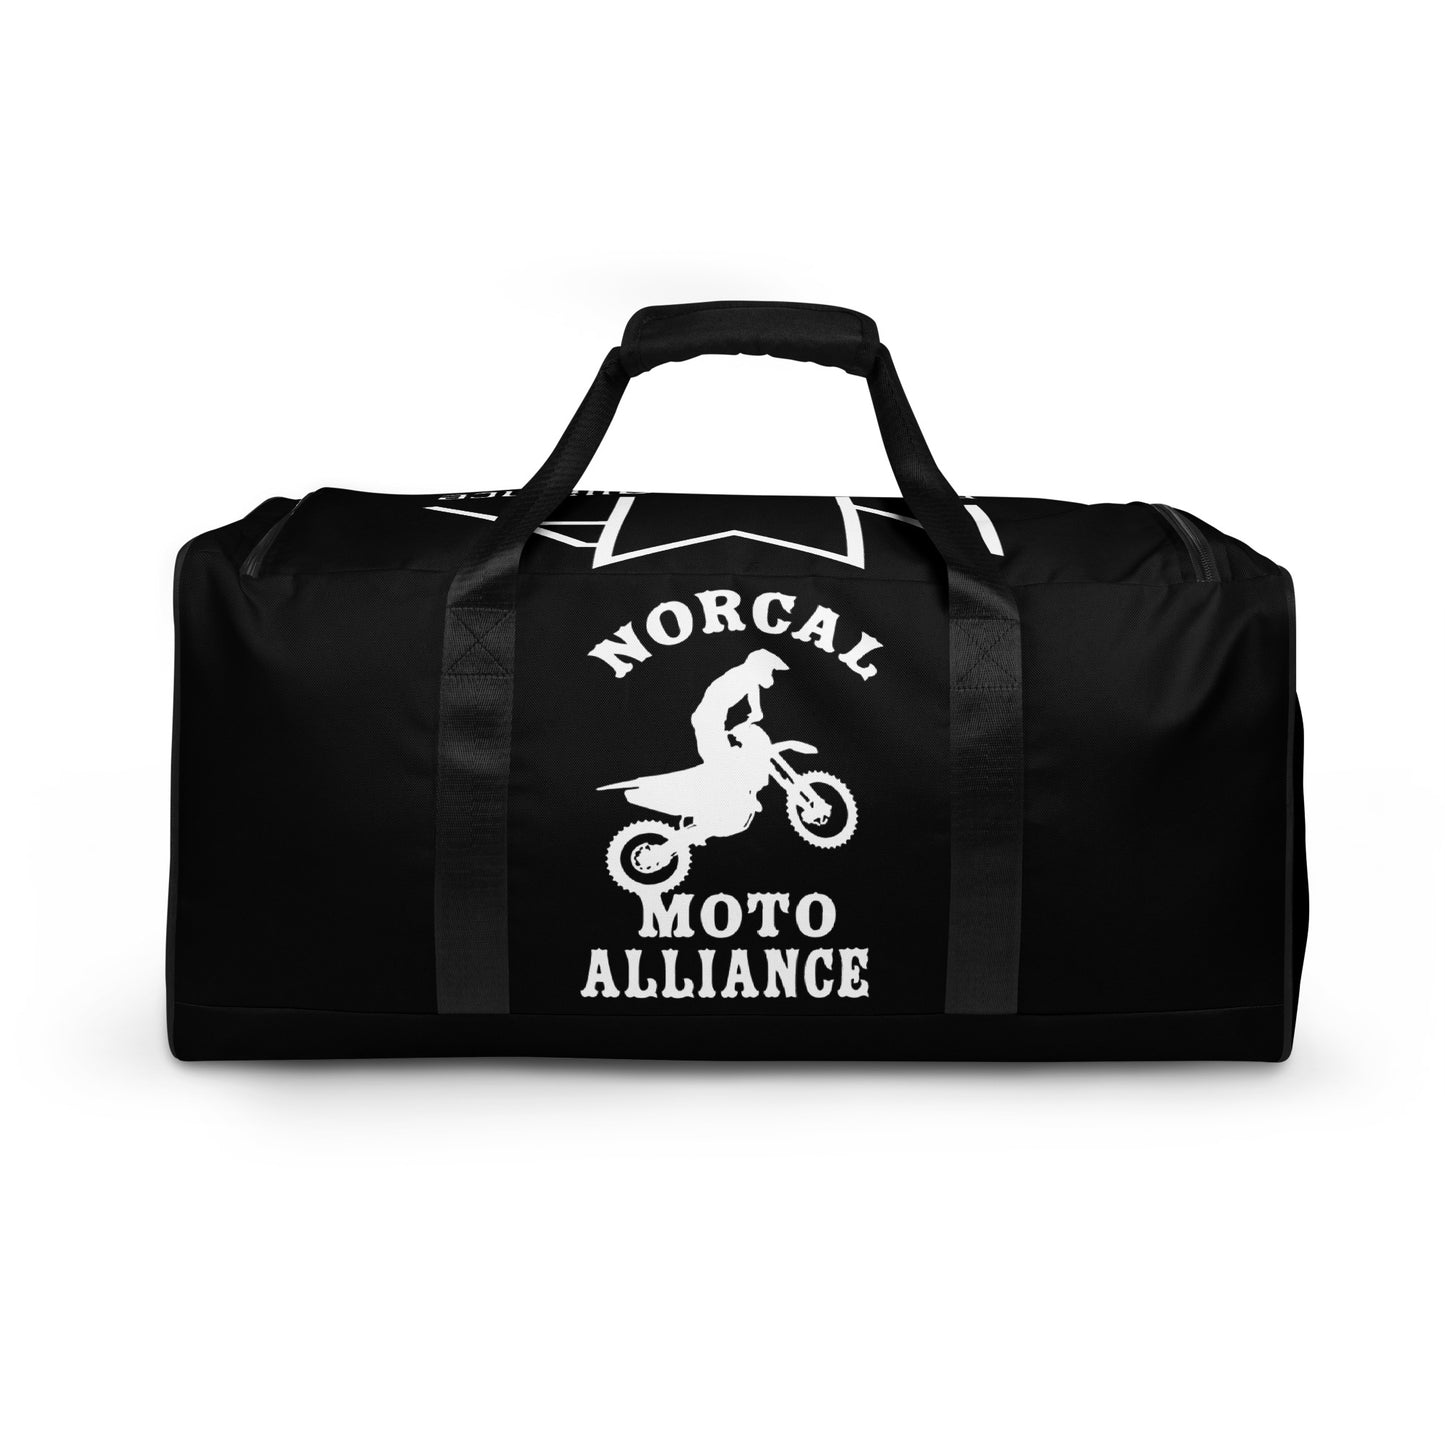 Norcal Moto Alliance Duffle Bag